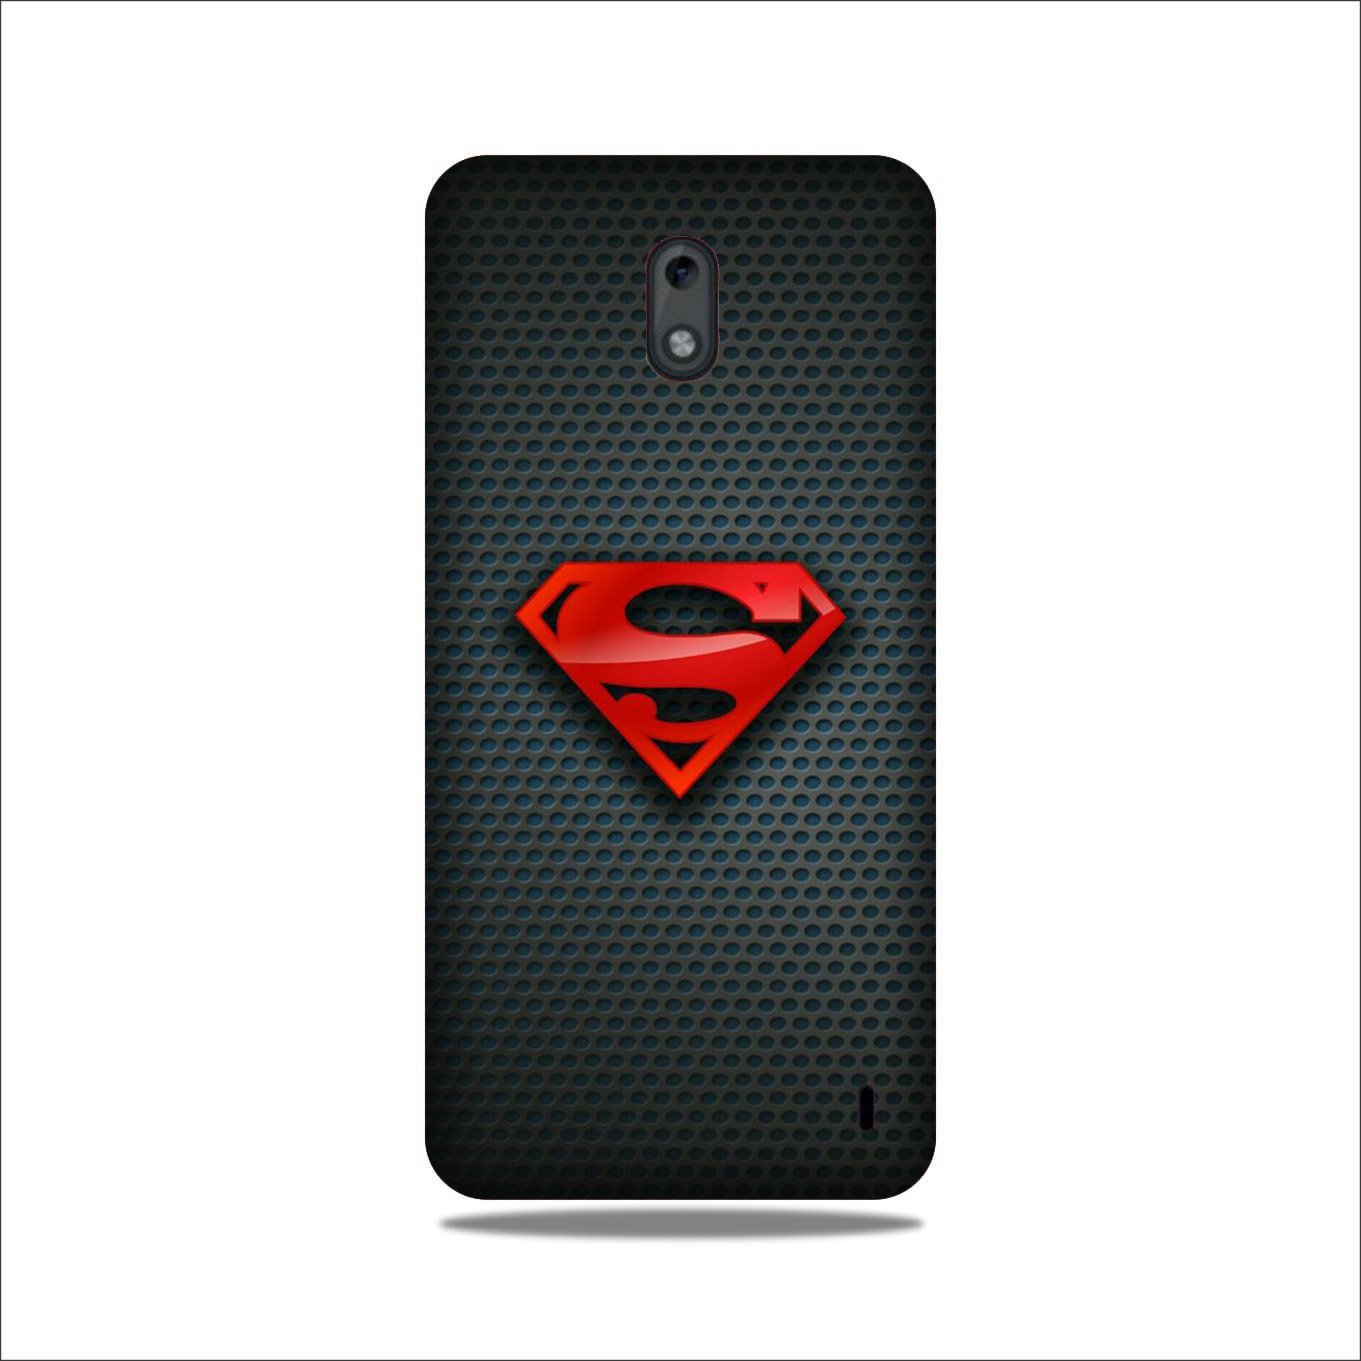 Superman Case for Nokia 2.2 (Design No. 247)